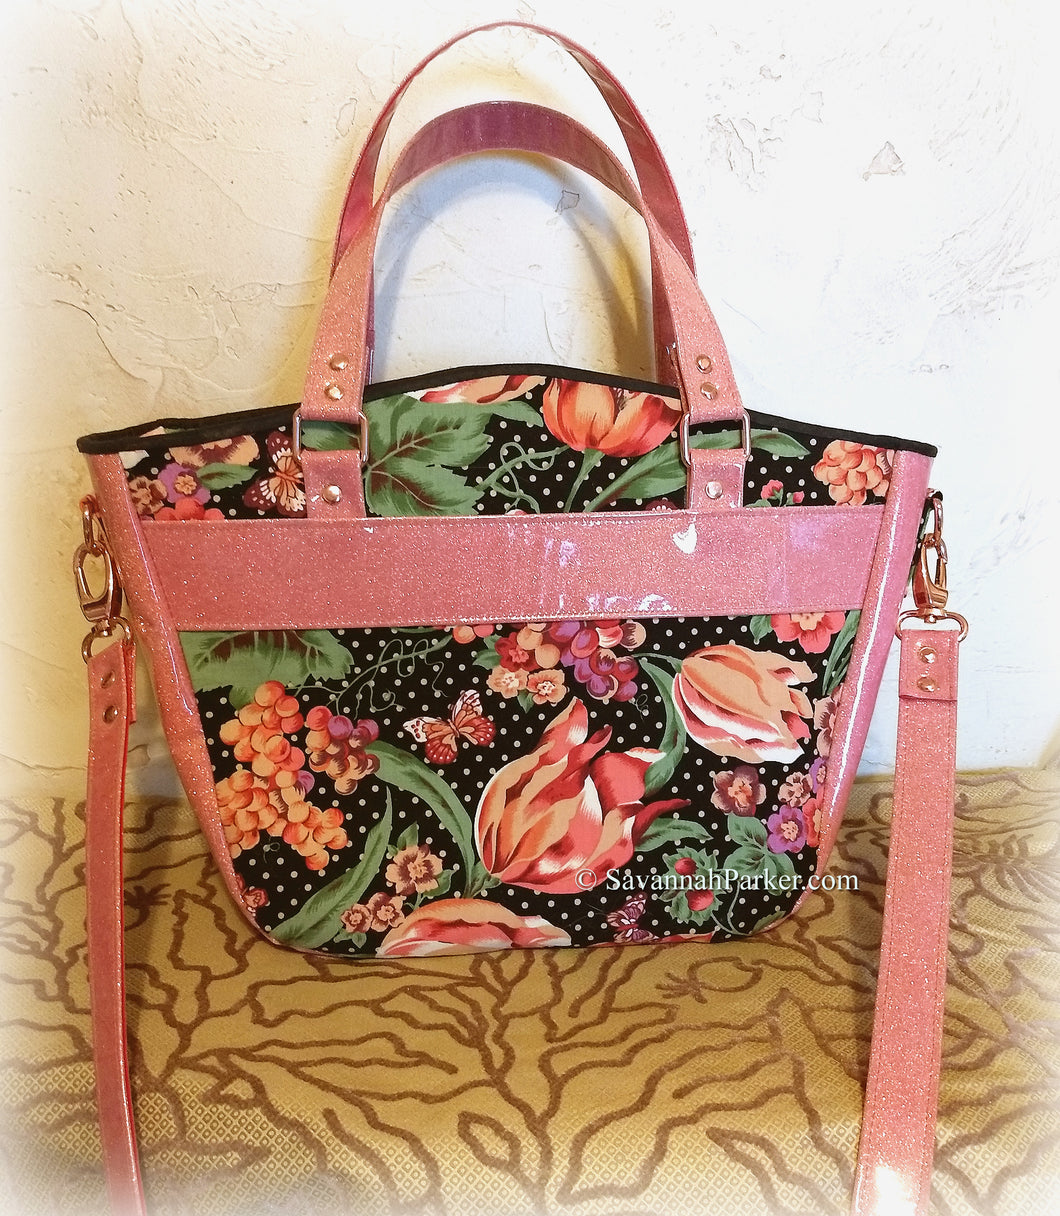 Coral Rose-Gold Glitter Vinyl Large Floral Handbag -Shoulder Bag -Tote Style -Vintage April Cornell Fabrics -Crossbody Strap -Double Handles